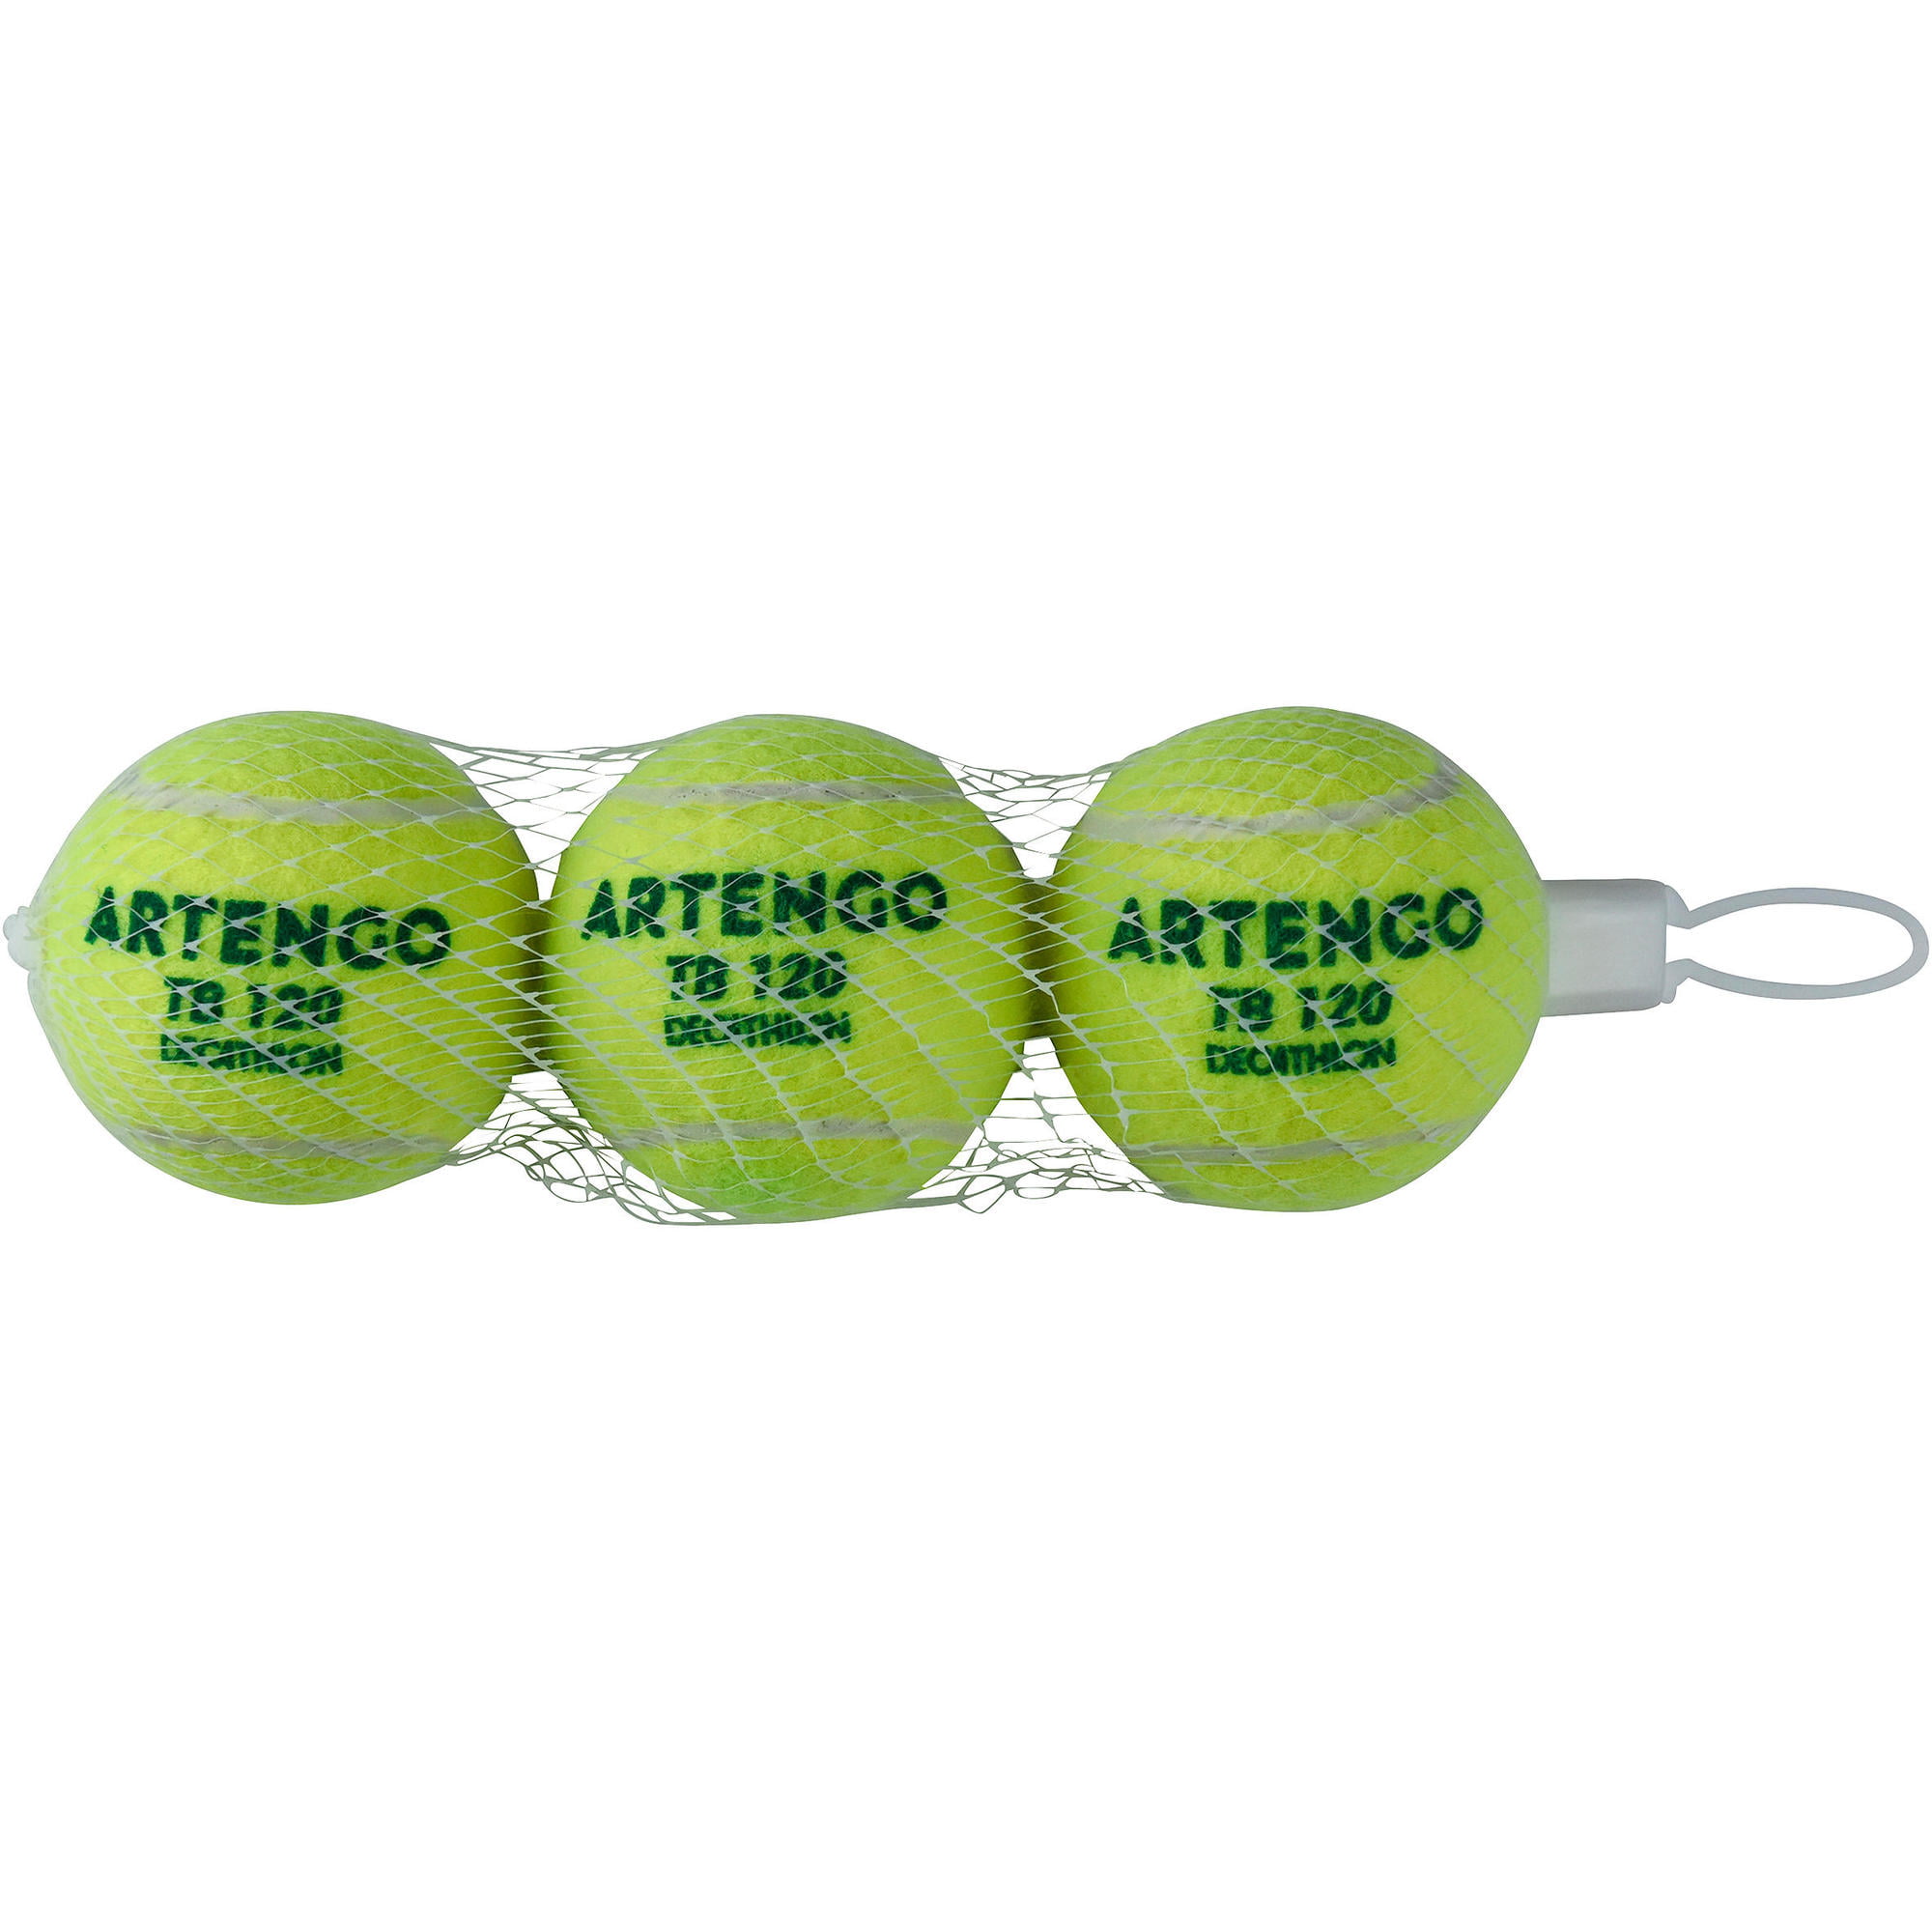 Artengo by DECATHLON - Tennis Ball x 3 